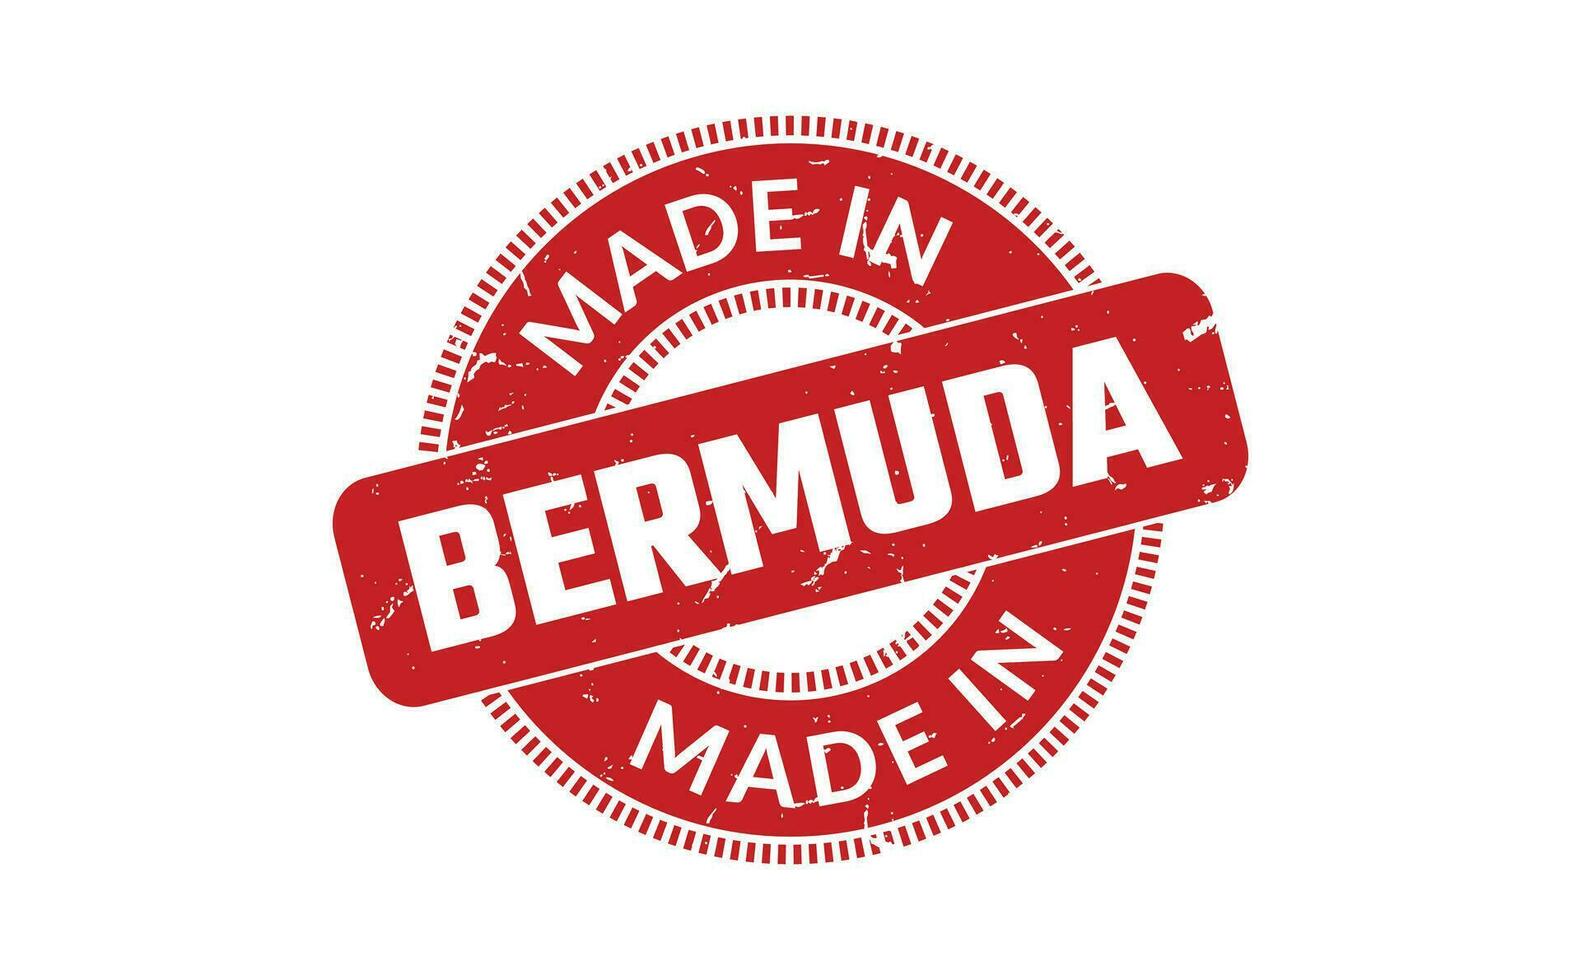 Made In Bermuda Rubber Stamp vector